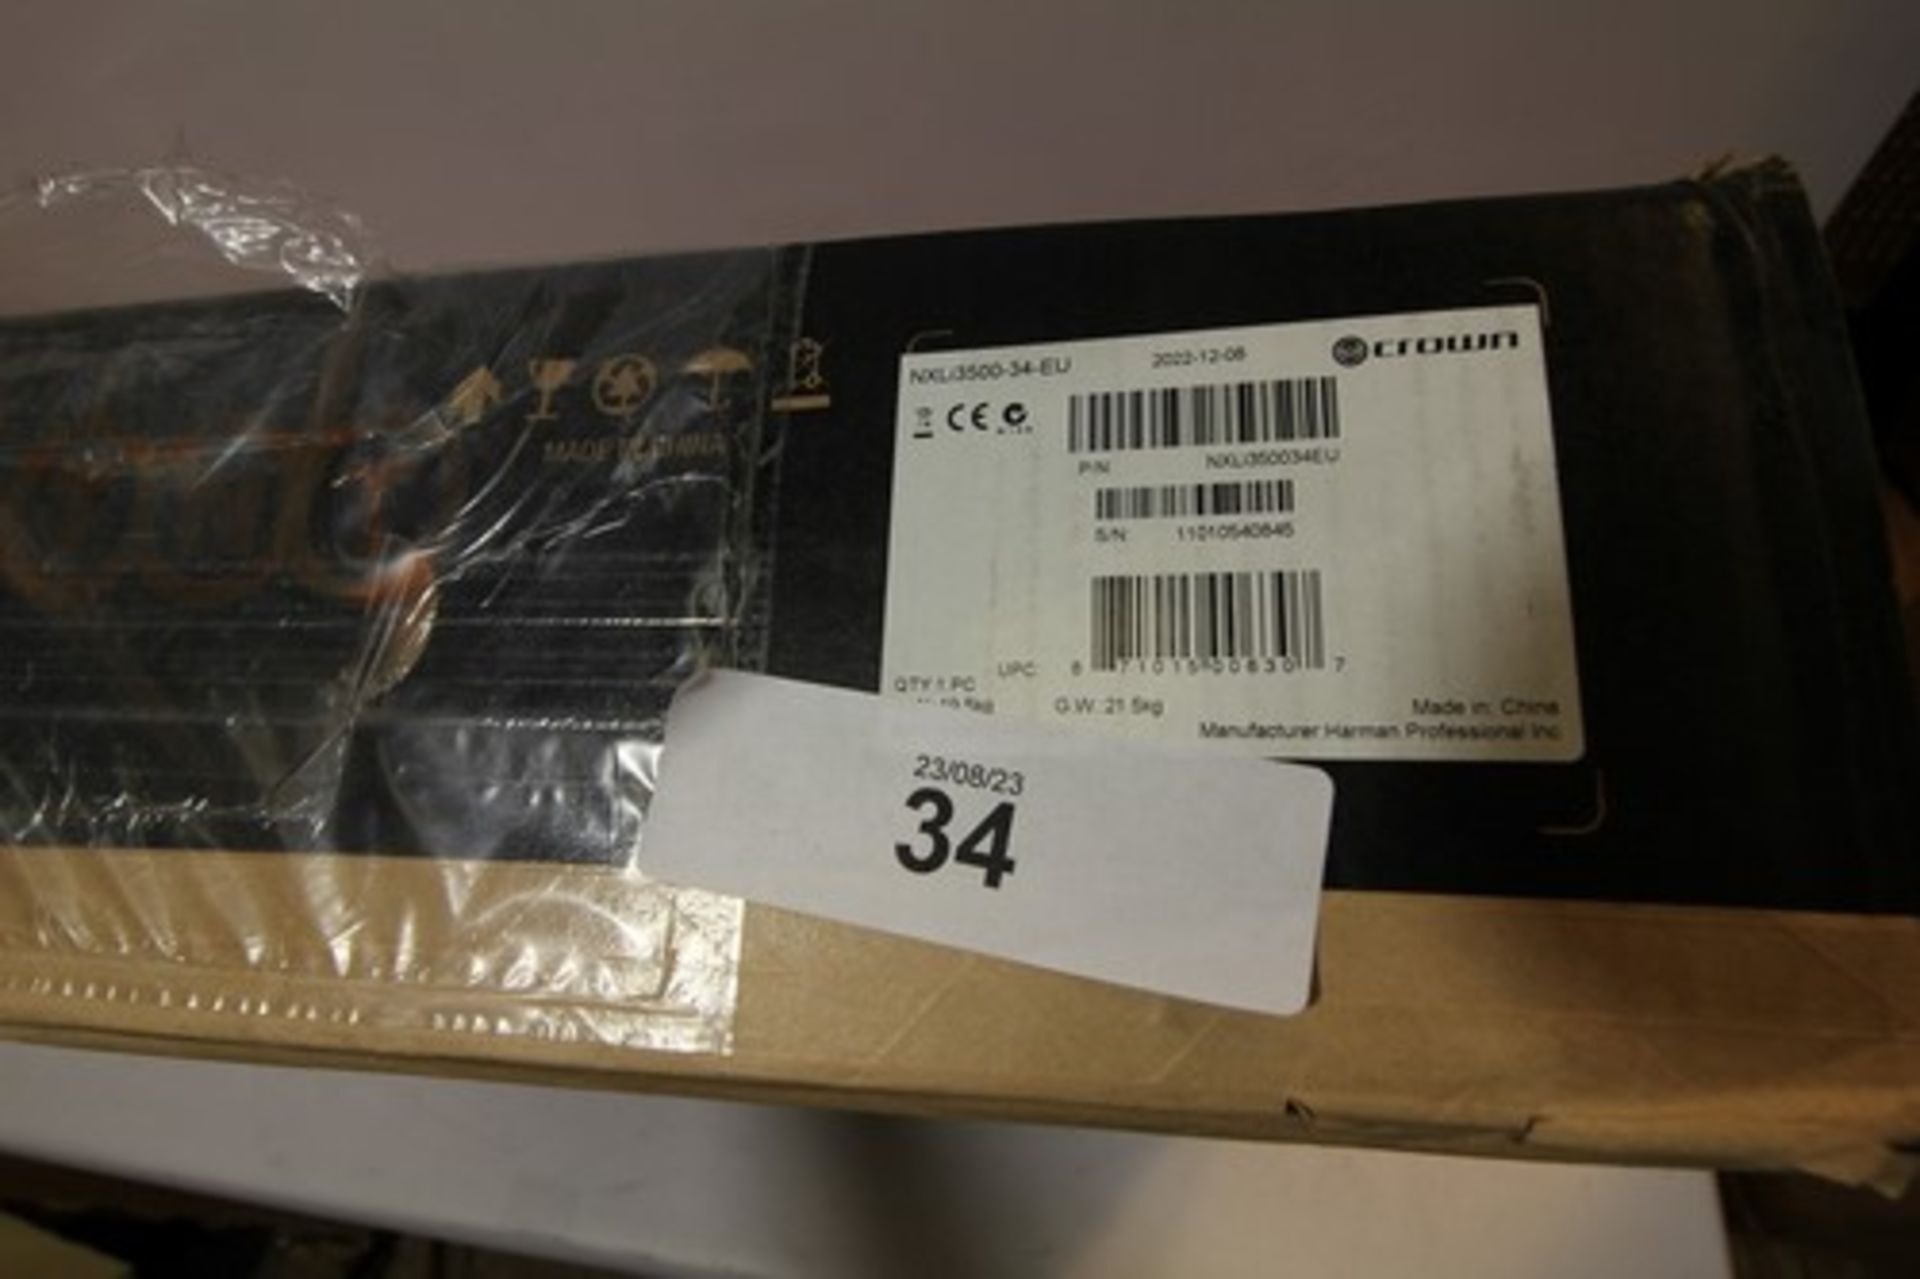 1 x Crown XLI3500 power amplifier, Model NXLi3500-34-EU - Sealed new in box (GS3) - Image 2 of 3